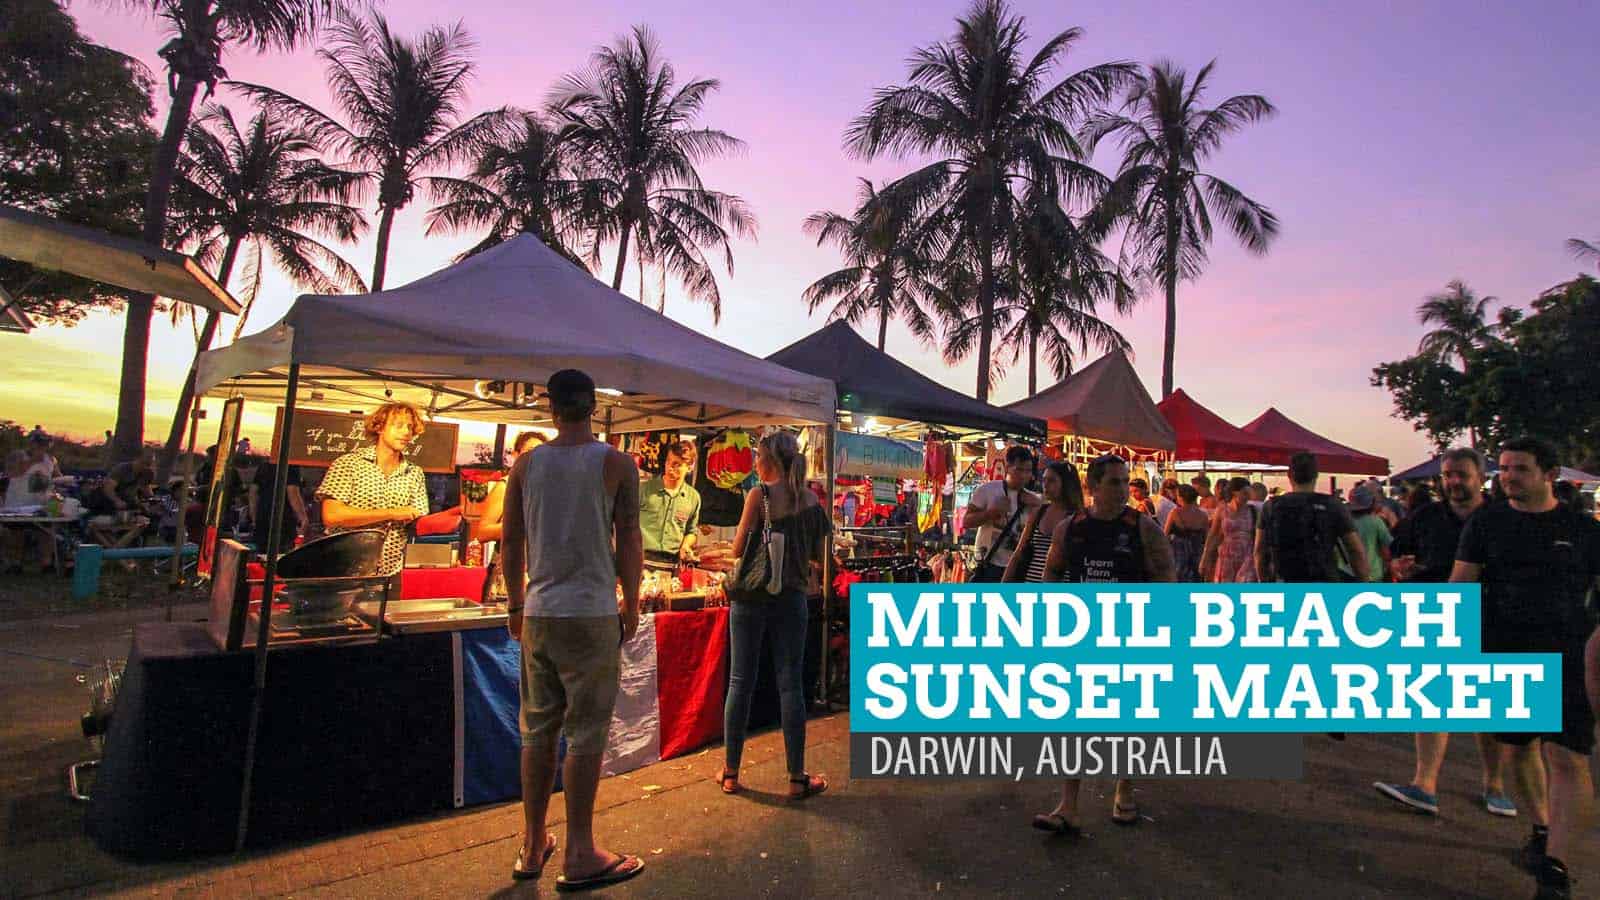 Mindil Beach Sunset Market in Darwin, Australia